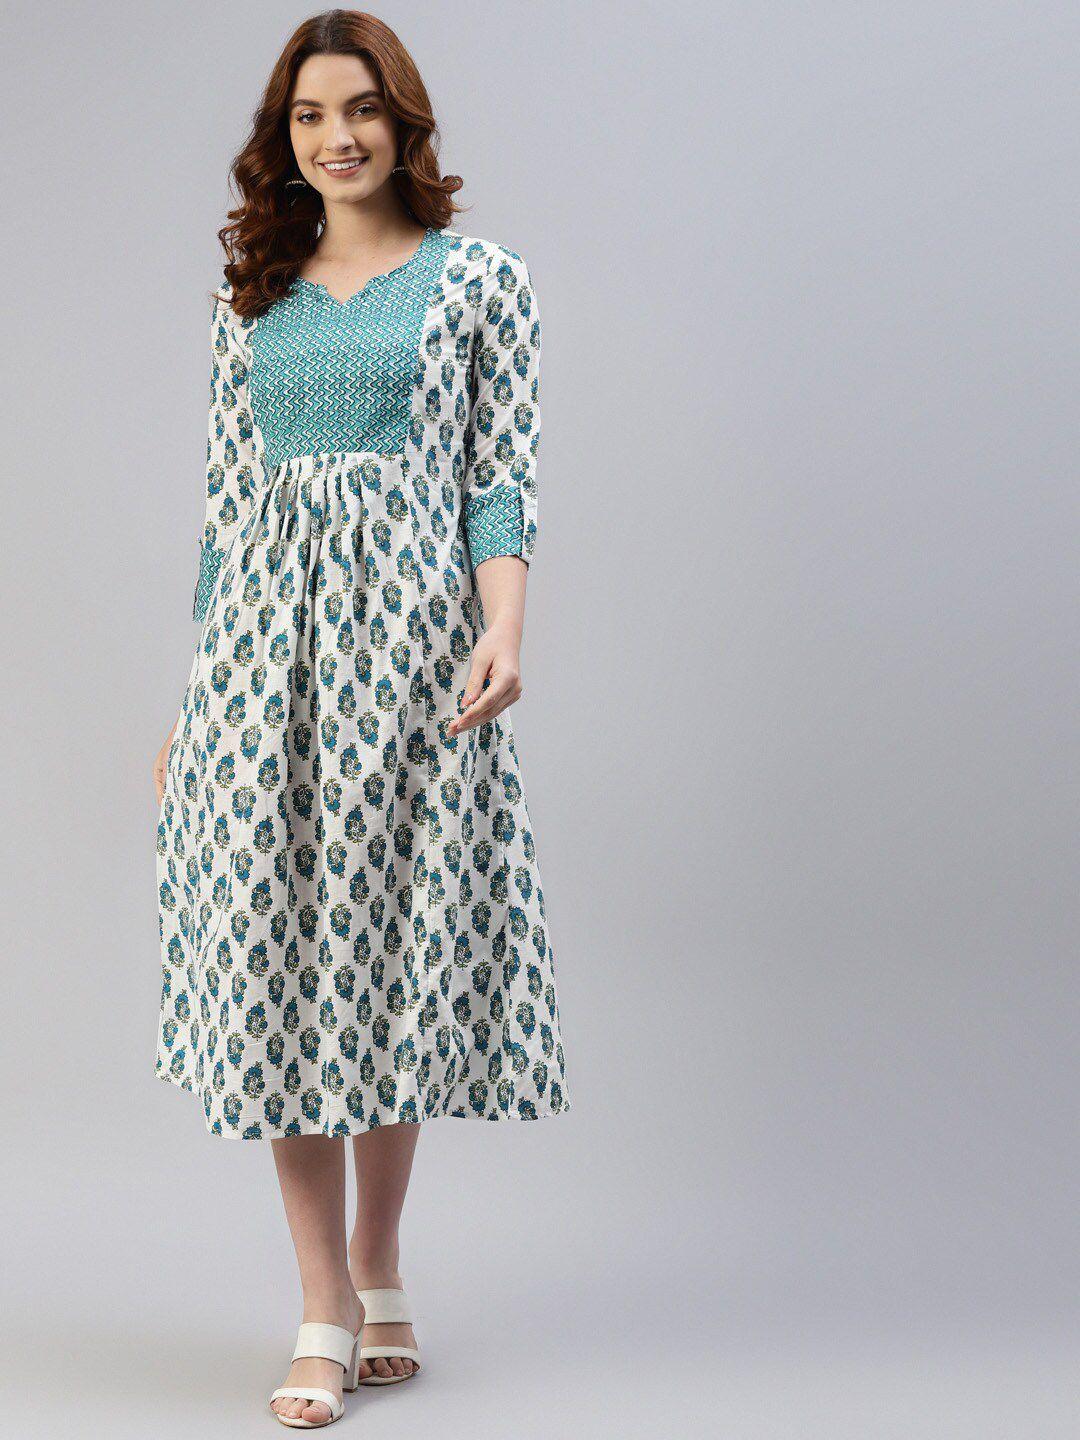 iridaa-jaipur-white-&-turquoise-blue-ethnic-motifs-ethnic-a-line-midi-cotton-dress